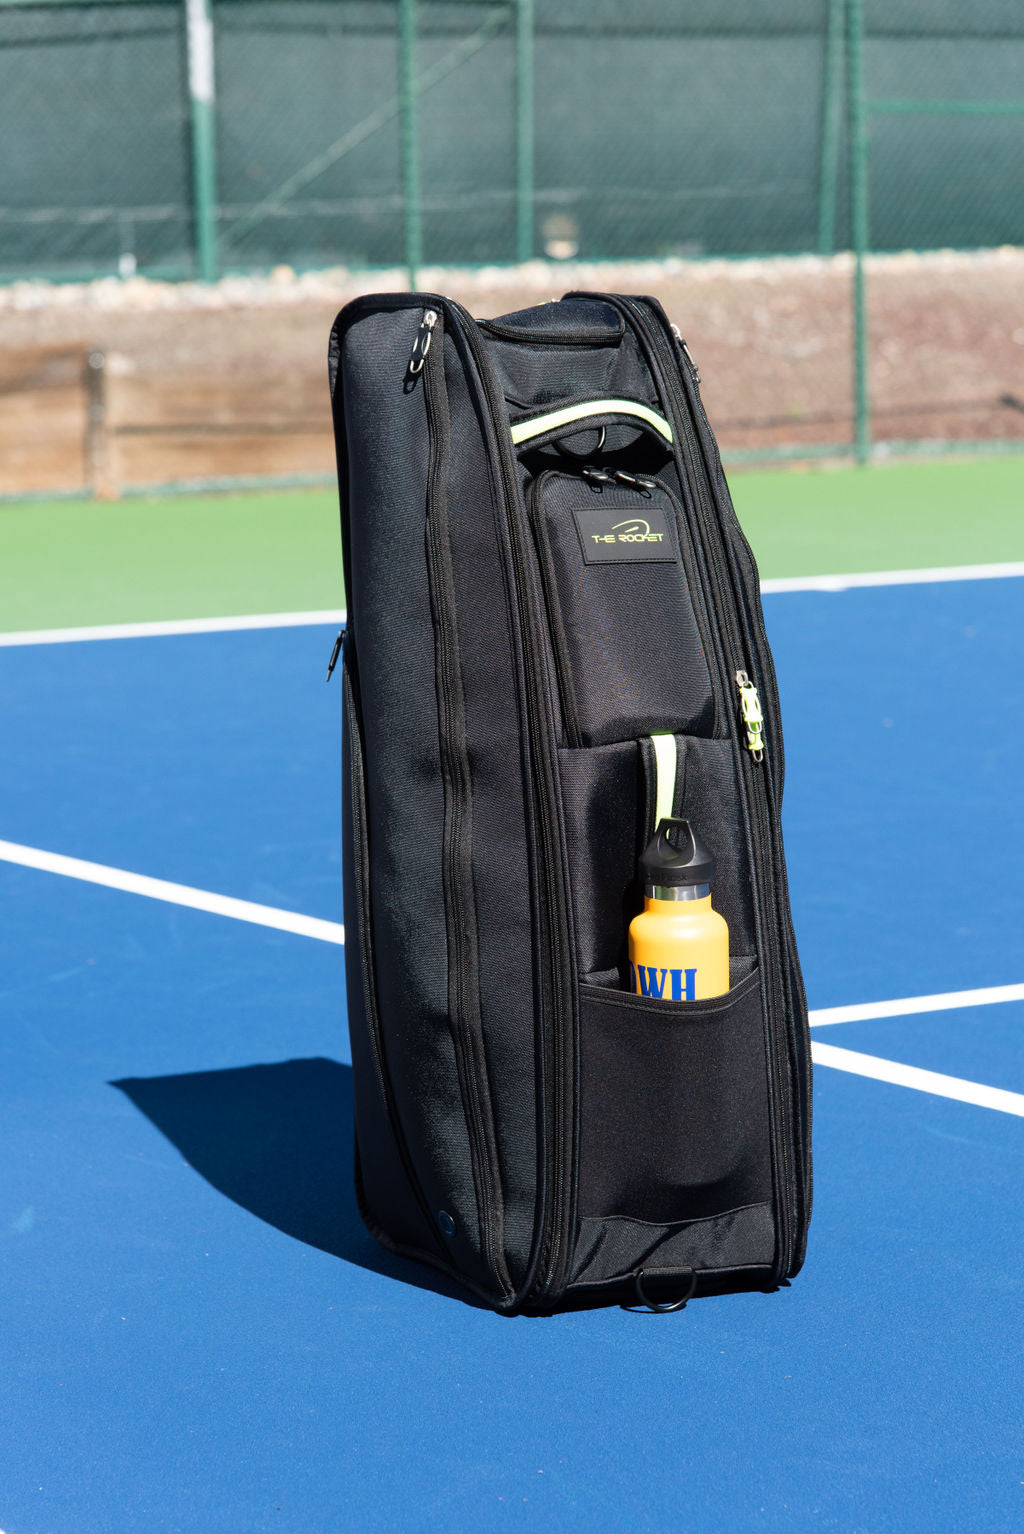 The Rocket tennis racquet bag by Tennis C Williams